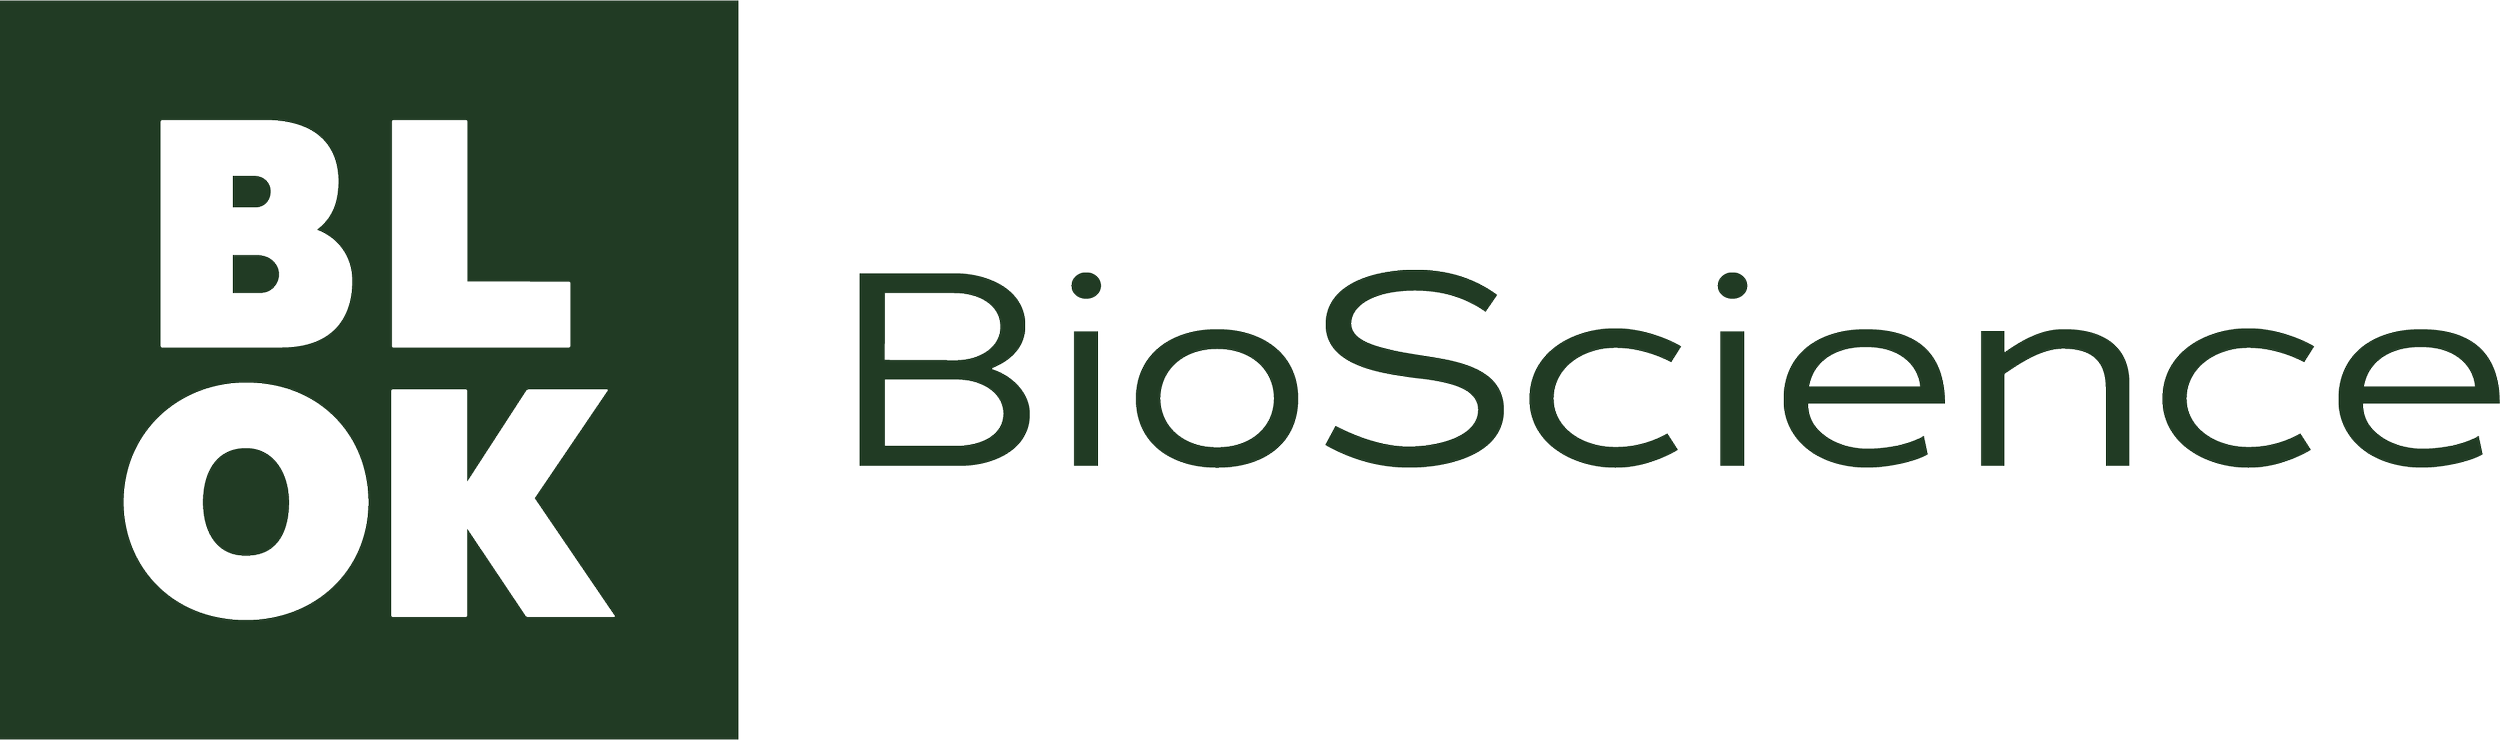 Blok-Bioscience-Logo-green.png